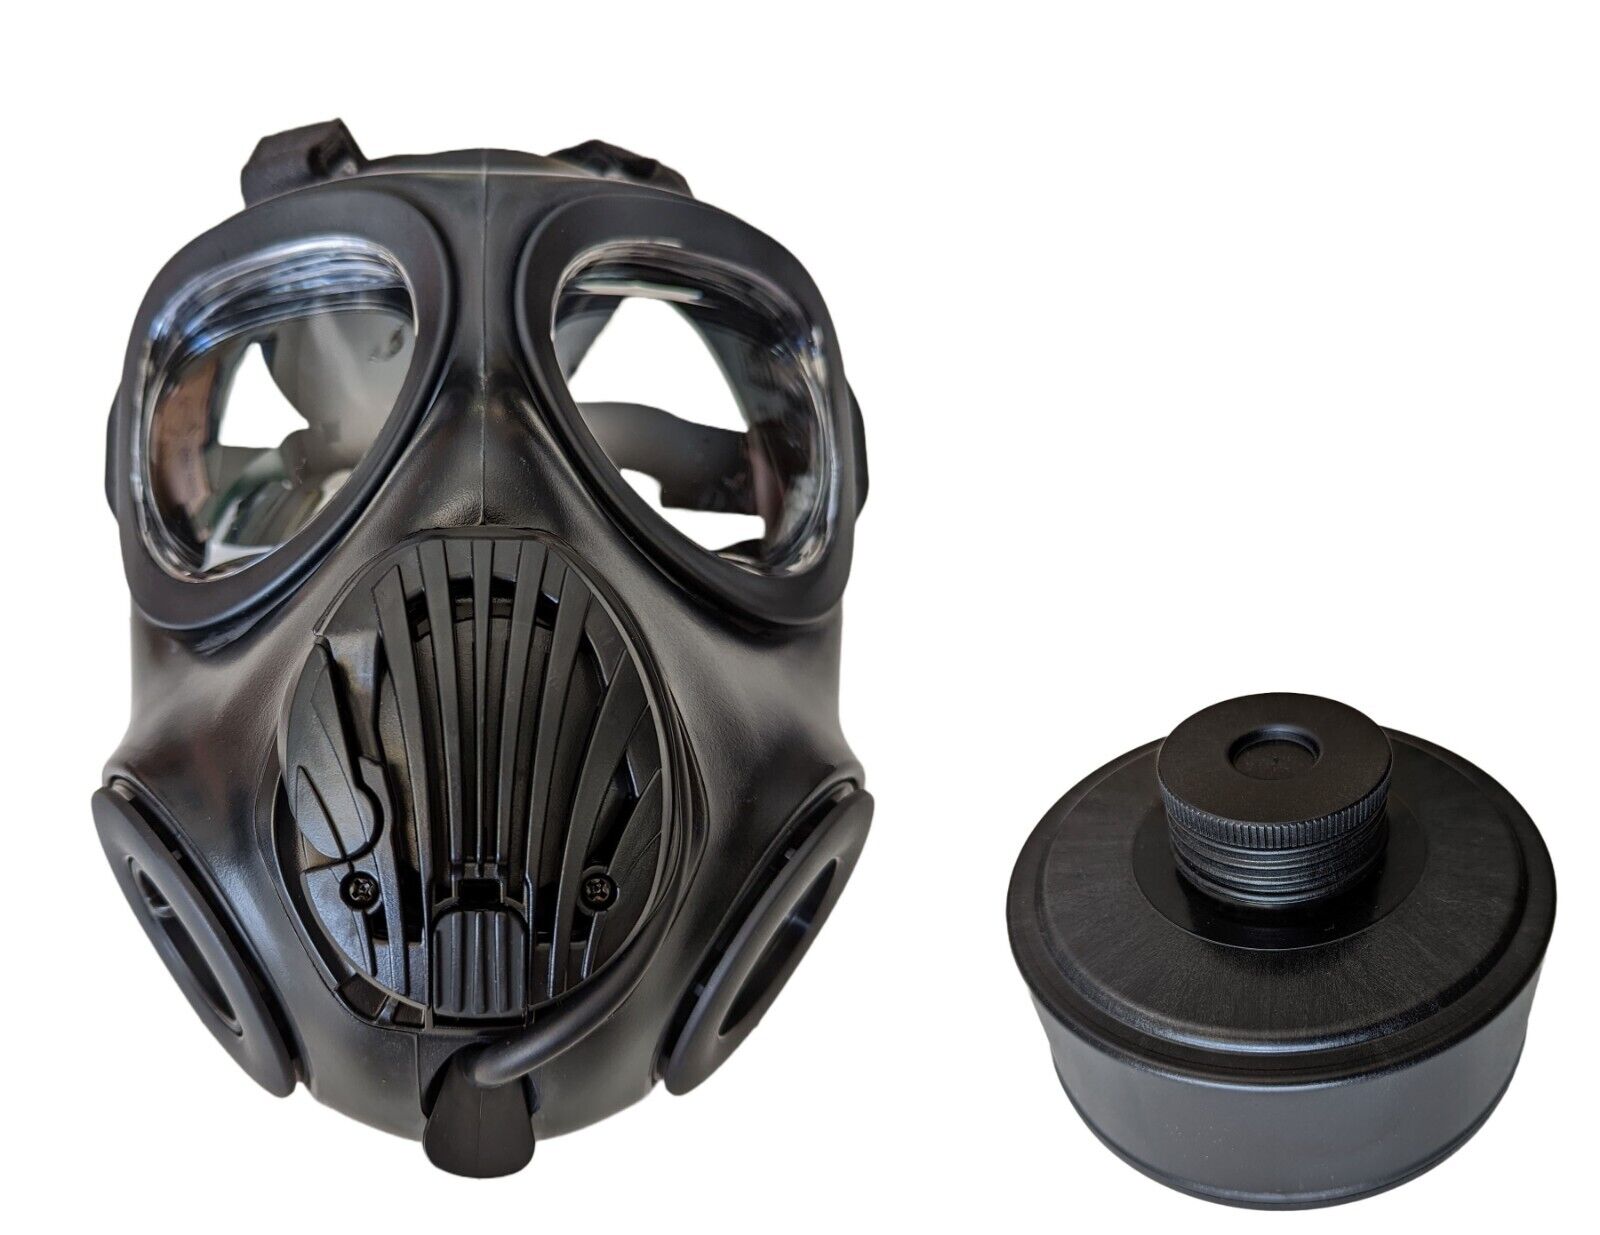 Korean K3 NATO CBRN Tactical Military Gas Mask Respirator & 40mm NBC Filter NIB